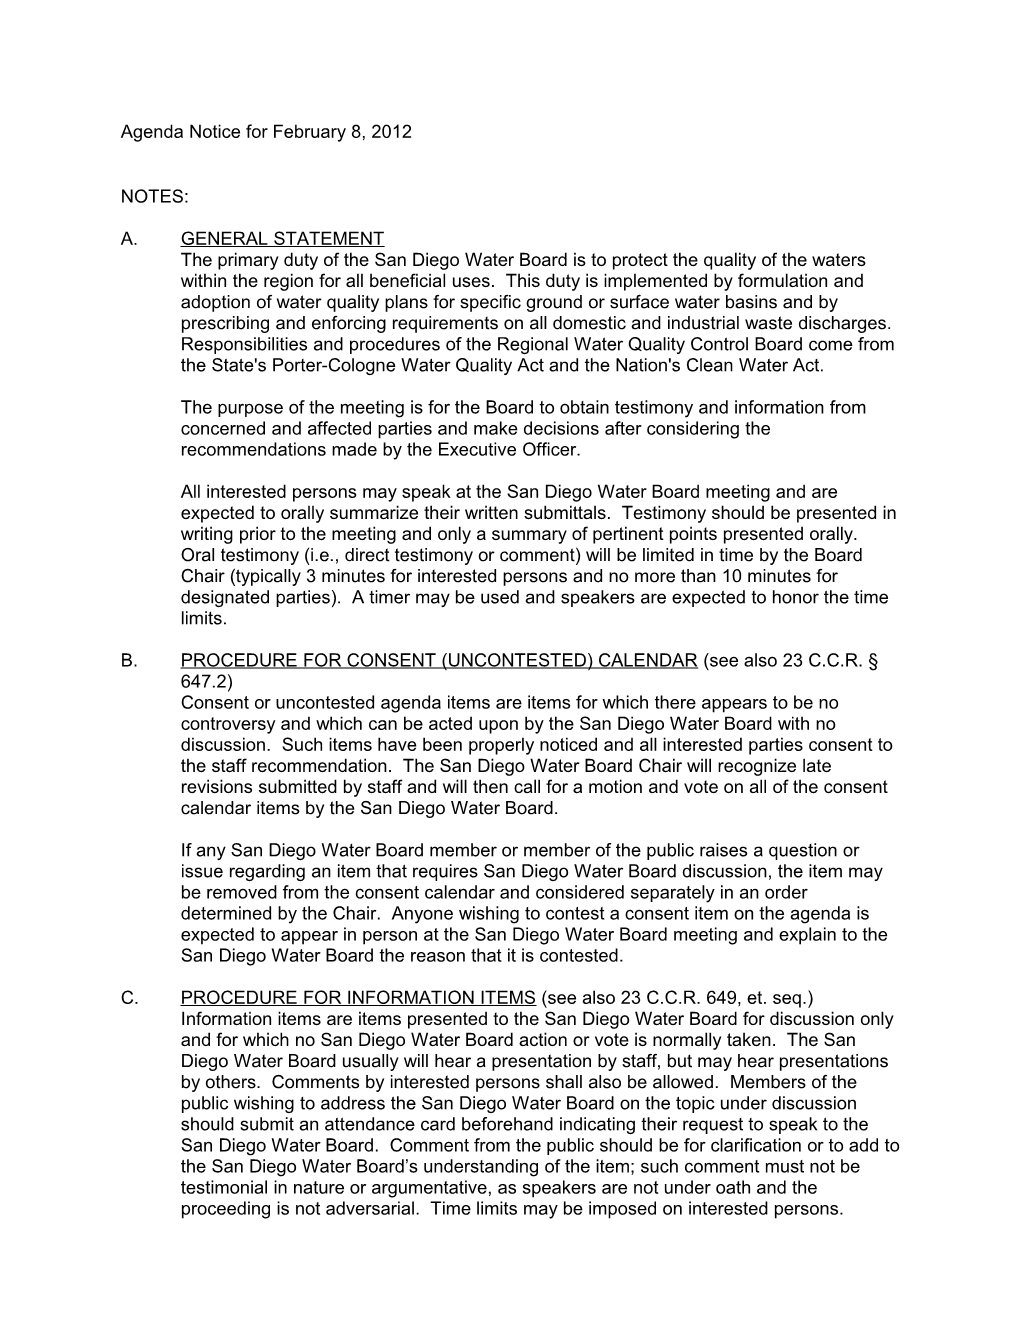 Agenda Notice Forfebruary 8, 2012